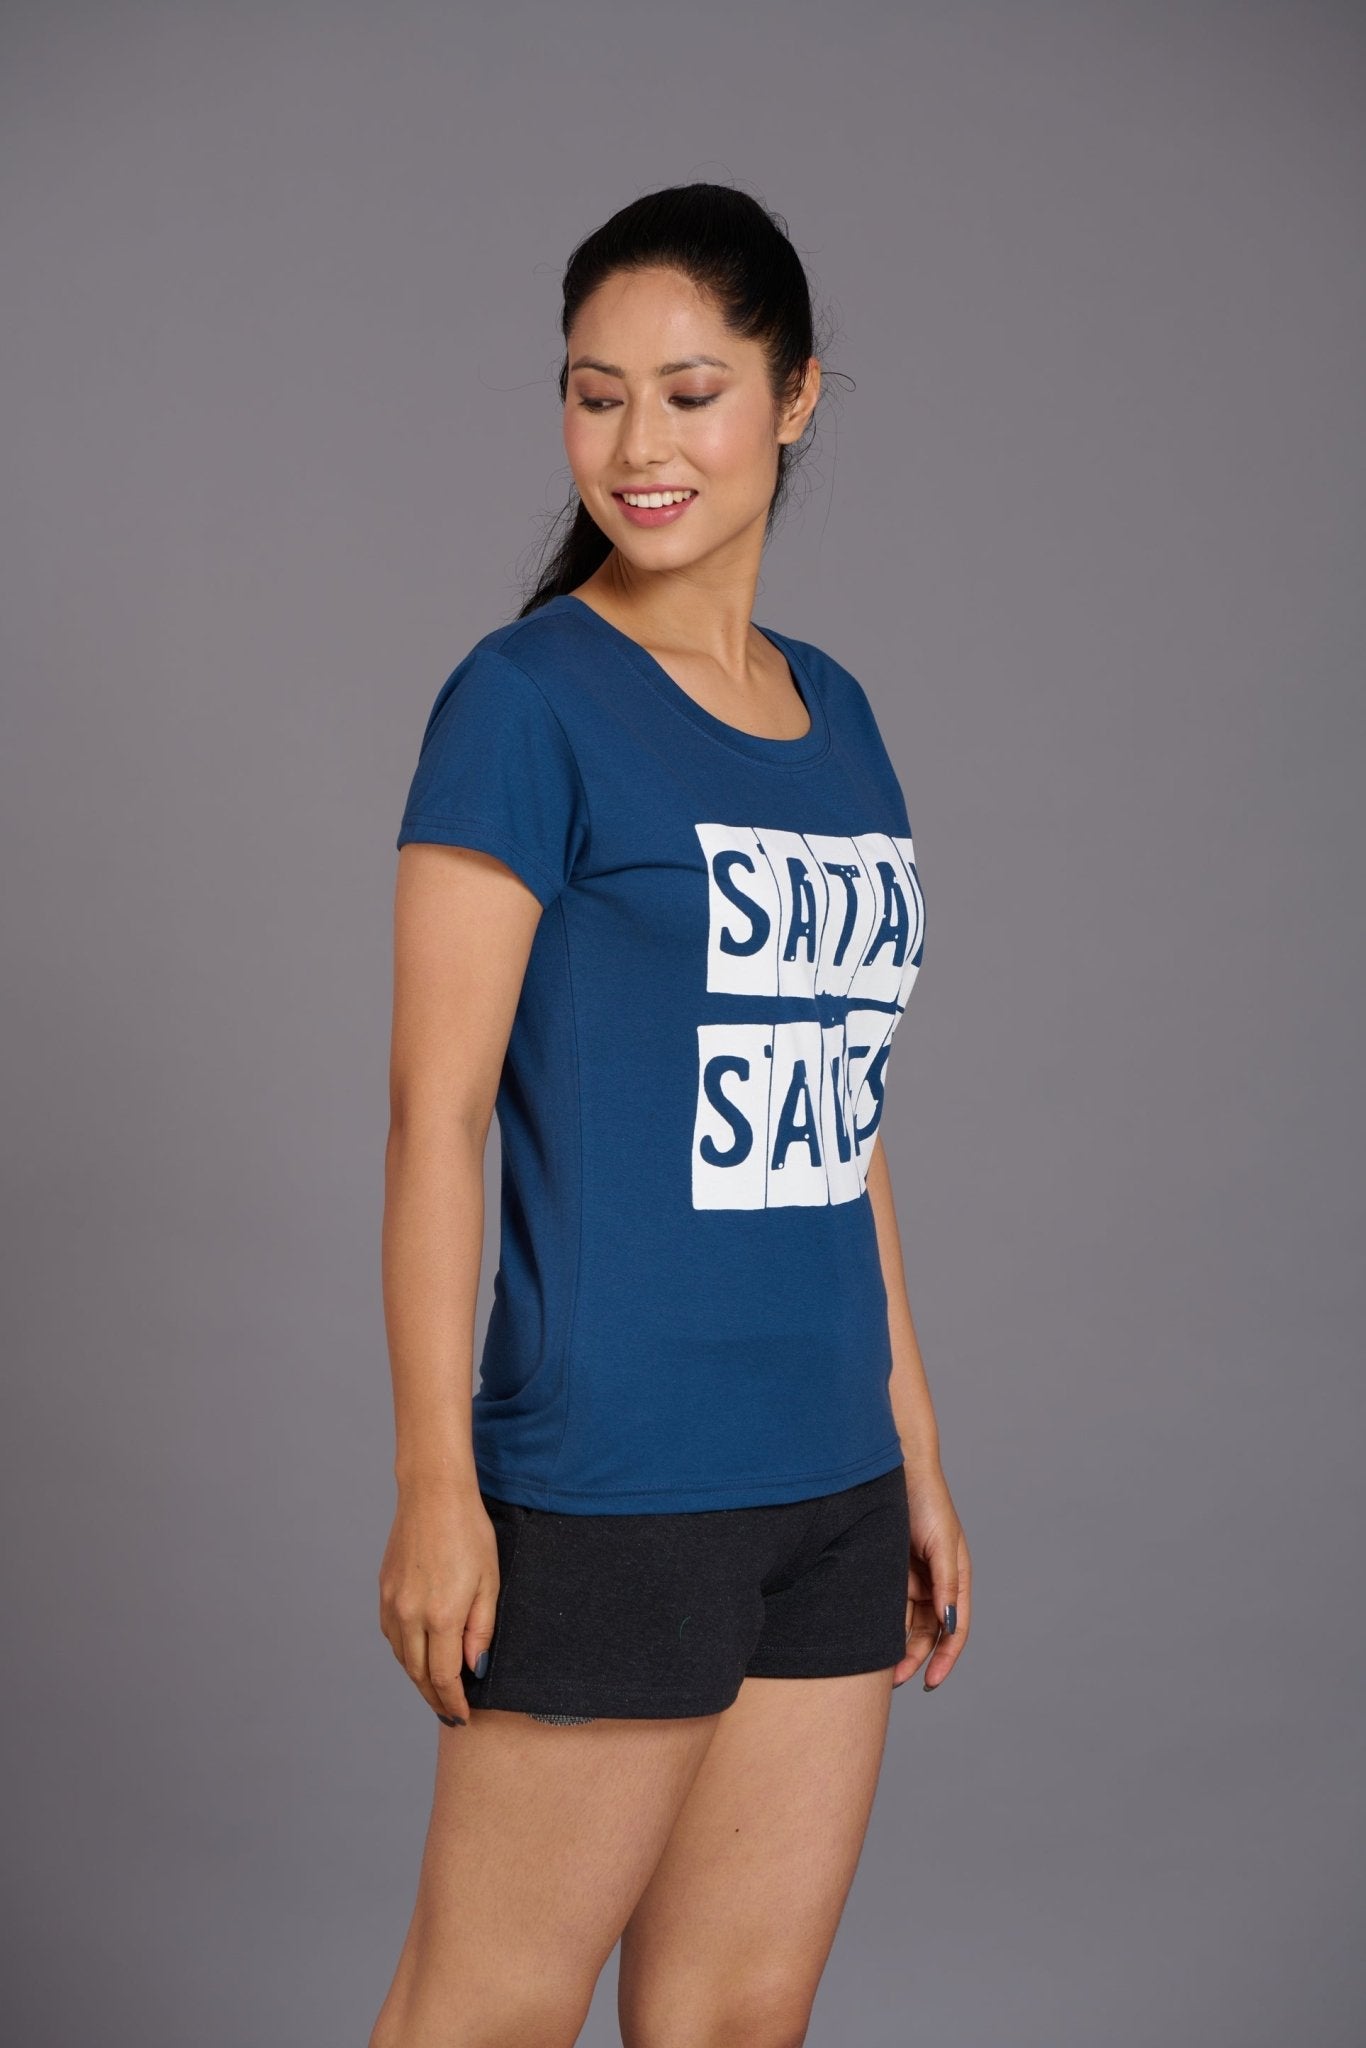 Satan Saves Printed Navy Blue T-Shirt for Women - Go Devil